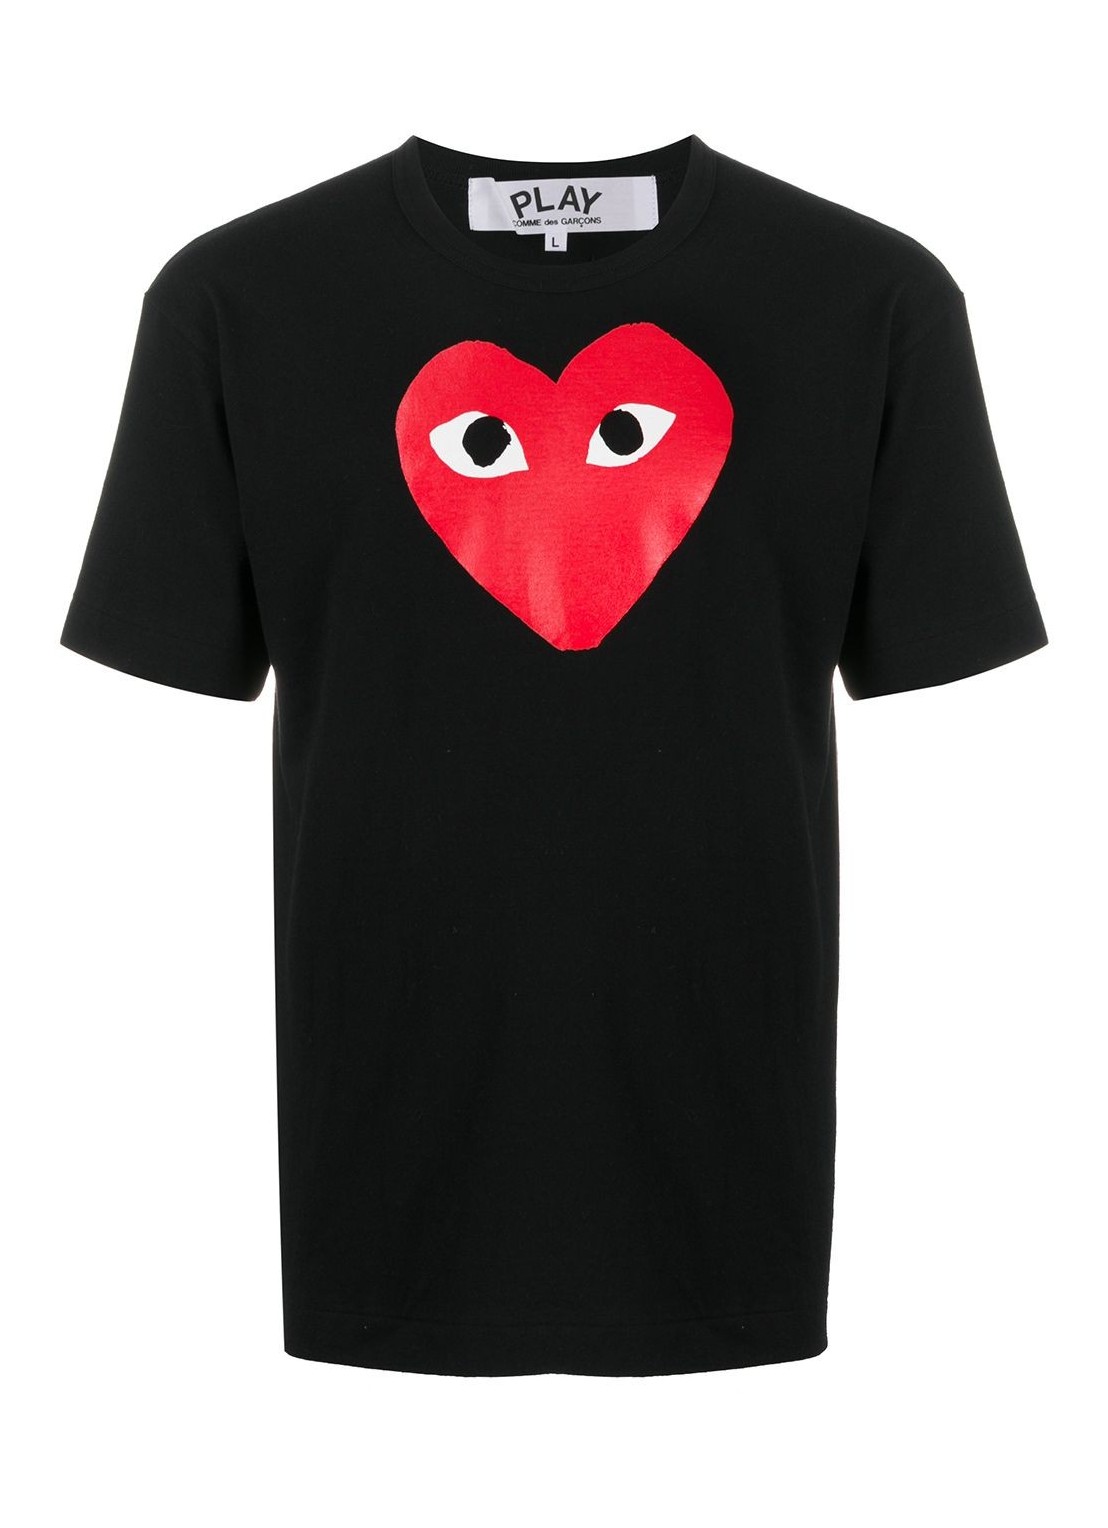 Camiseta comme des garcons t-shirt man play t-shirt men - red heart p1t112 black talla L
 